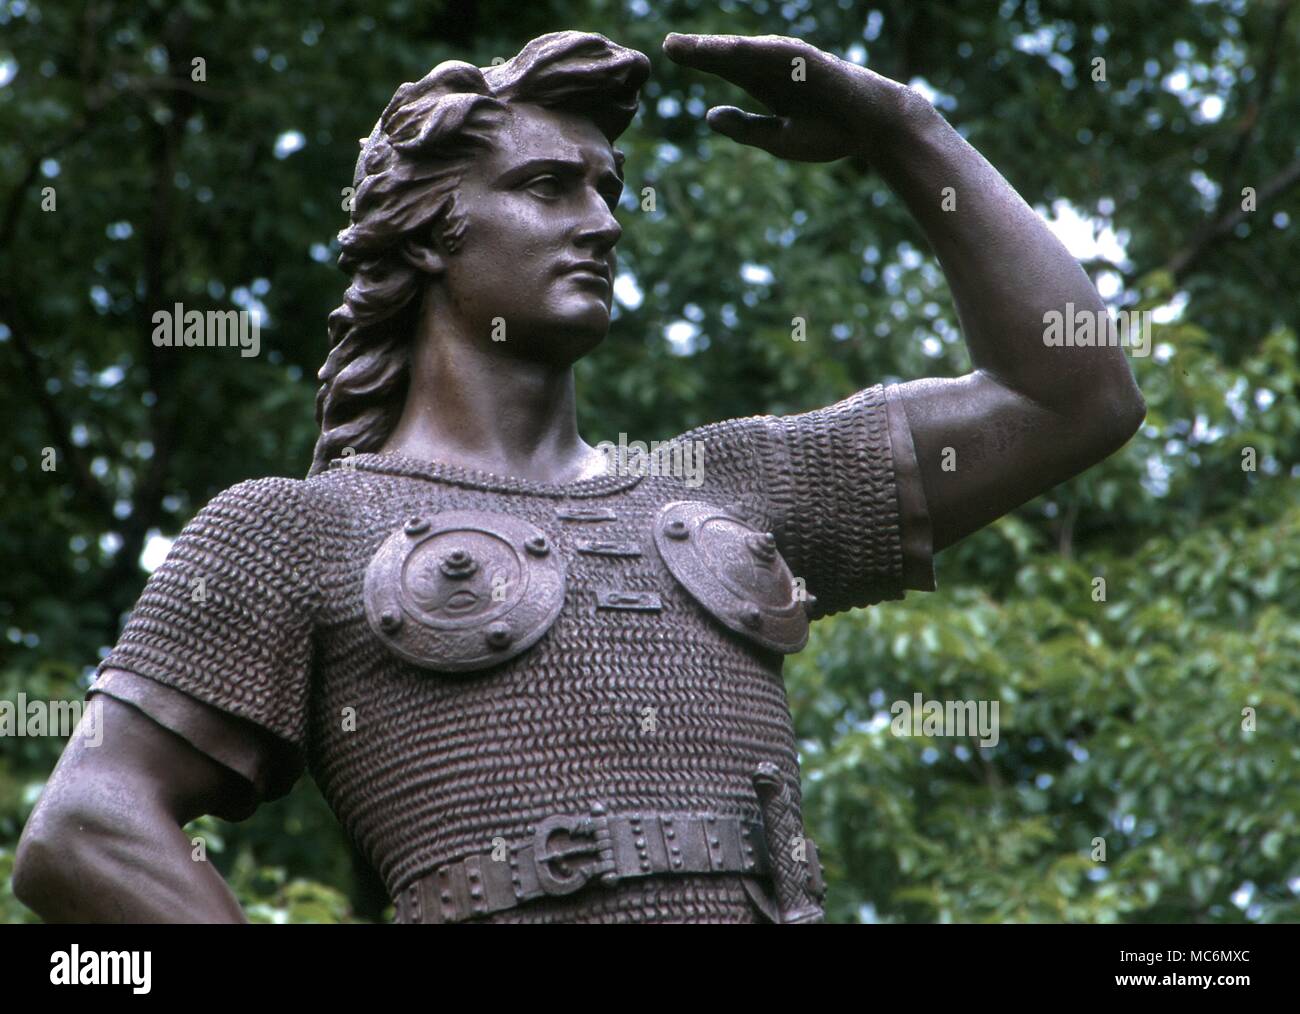 Historia de América - Leif Erickson estatua de Leif Ericson, quien desembarcó en América circa 1000 AD. En Commonwealth Avenue, Boston. En el zócalo, su nombre se establece en antiguas runas. Foto de stock